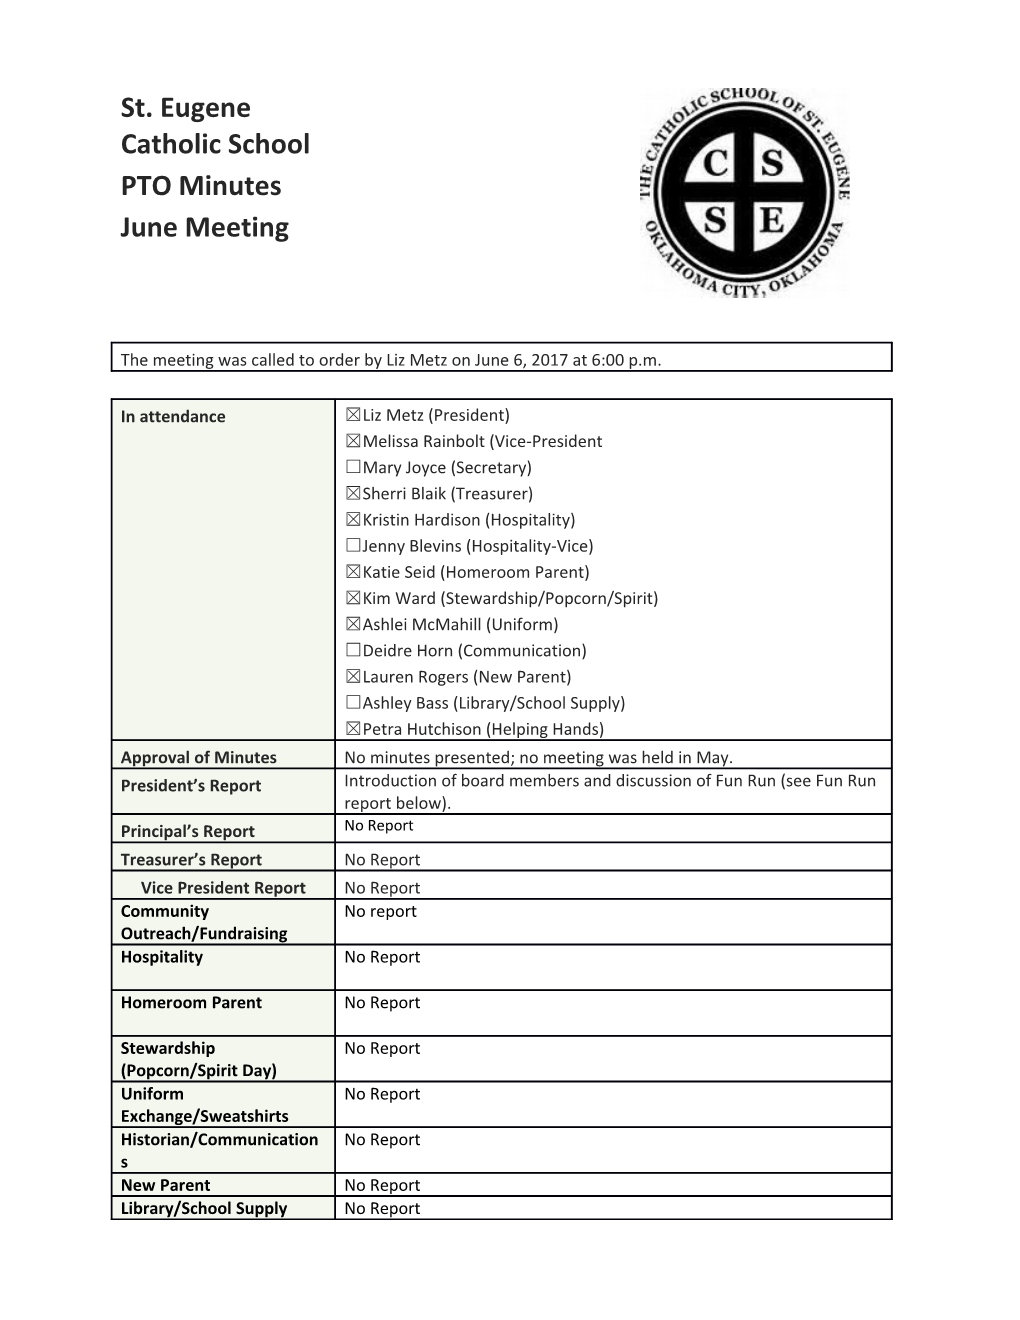 PTA Meeting Minutes Template